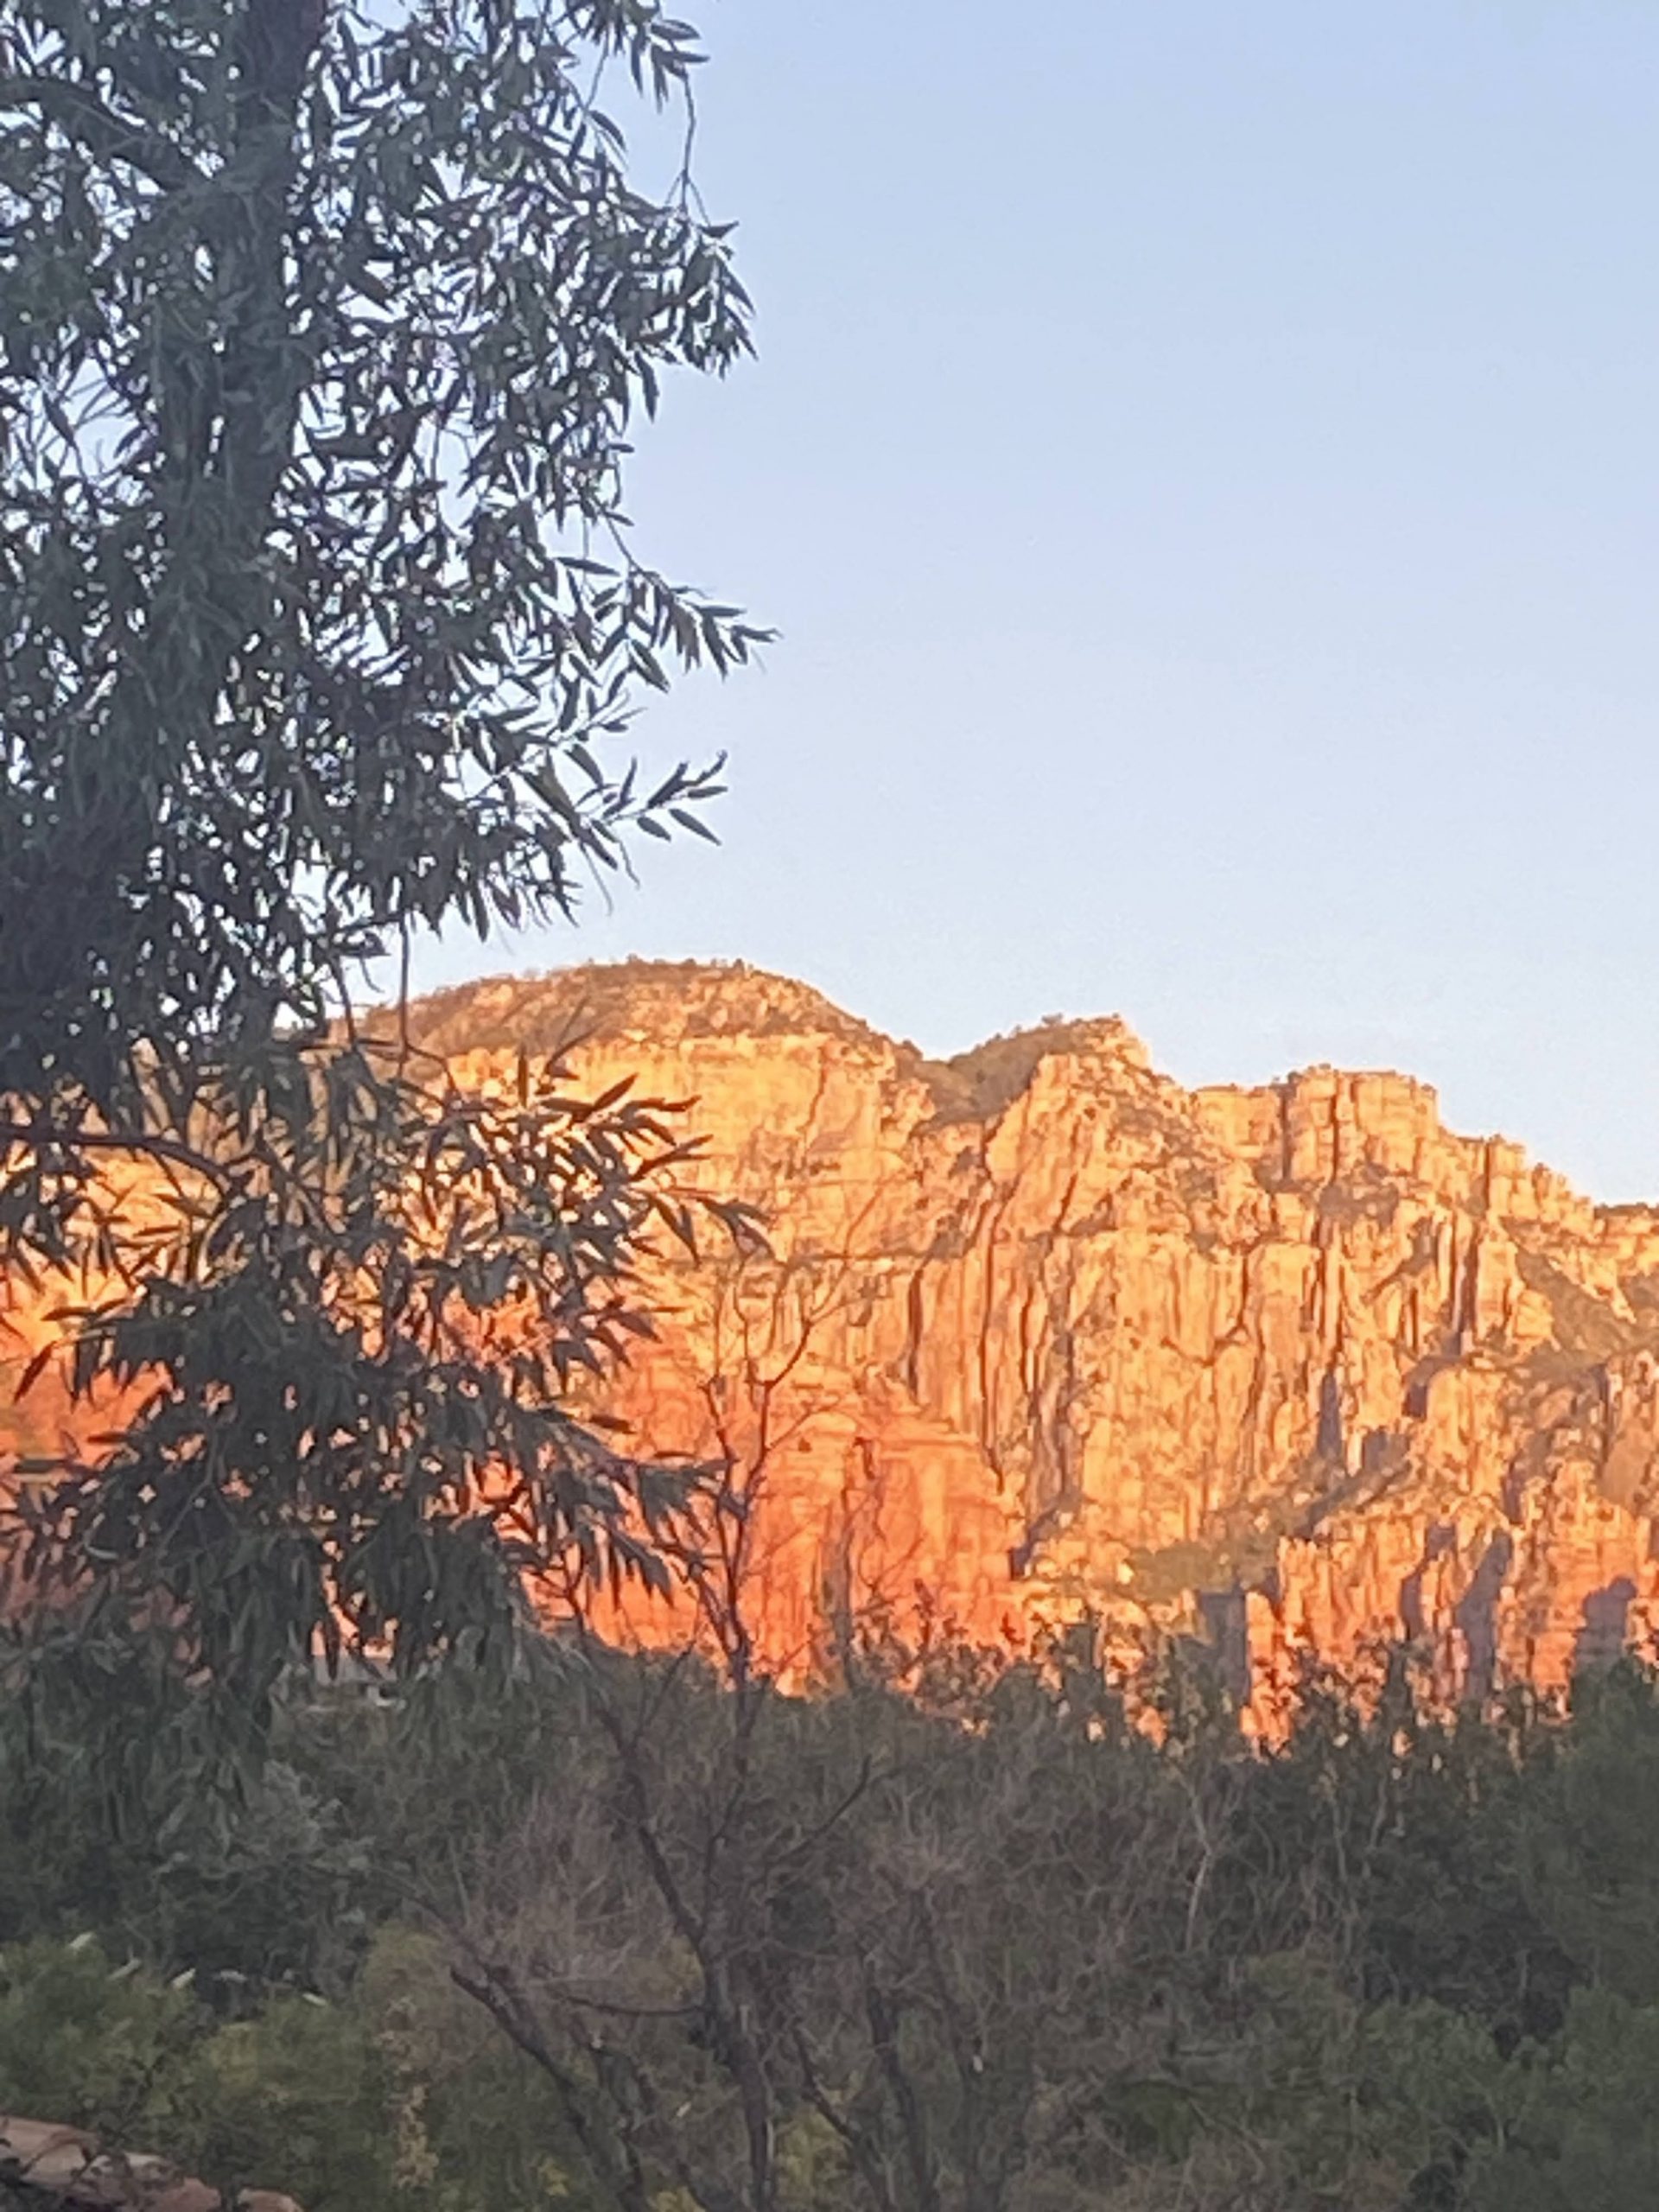 Photograph of the sun setting in Sedona, Arizona